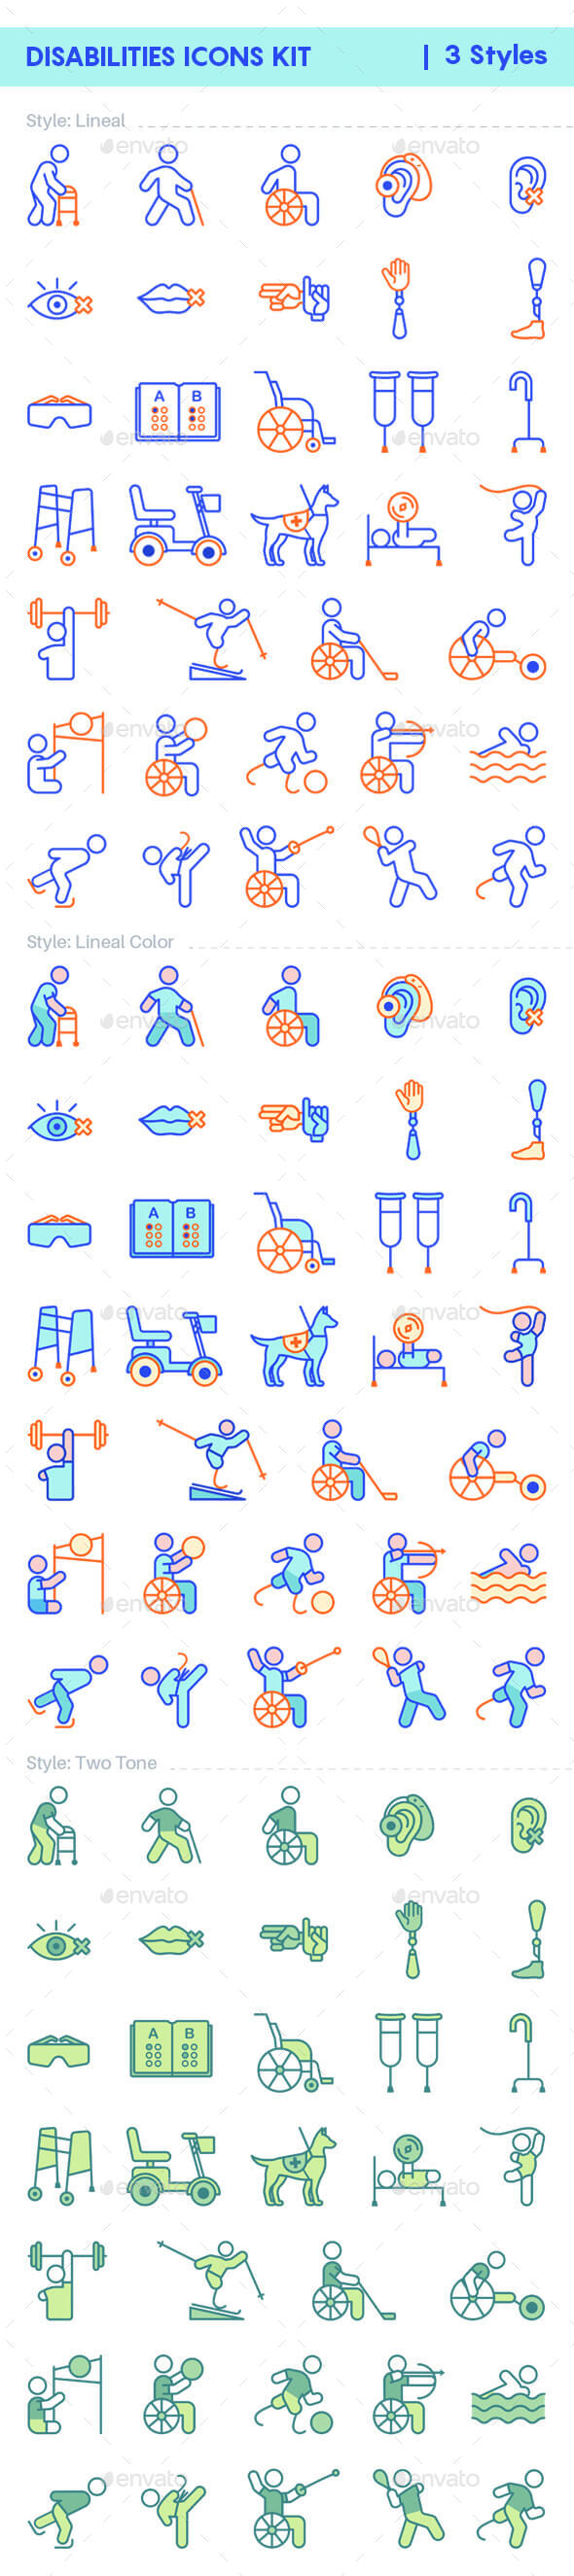 Disability Icons Kit